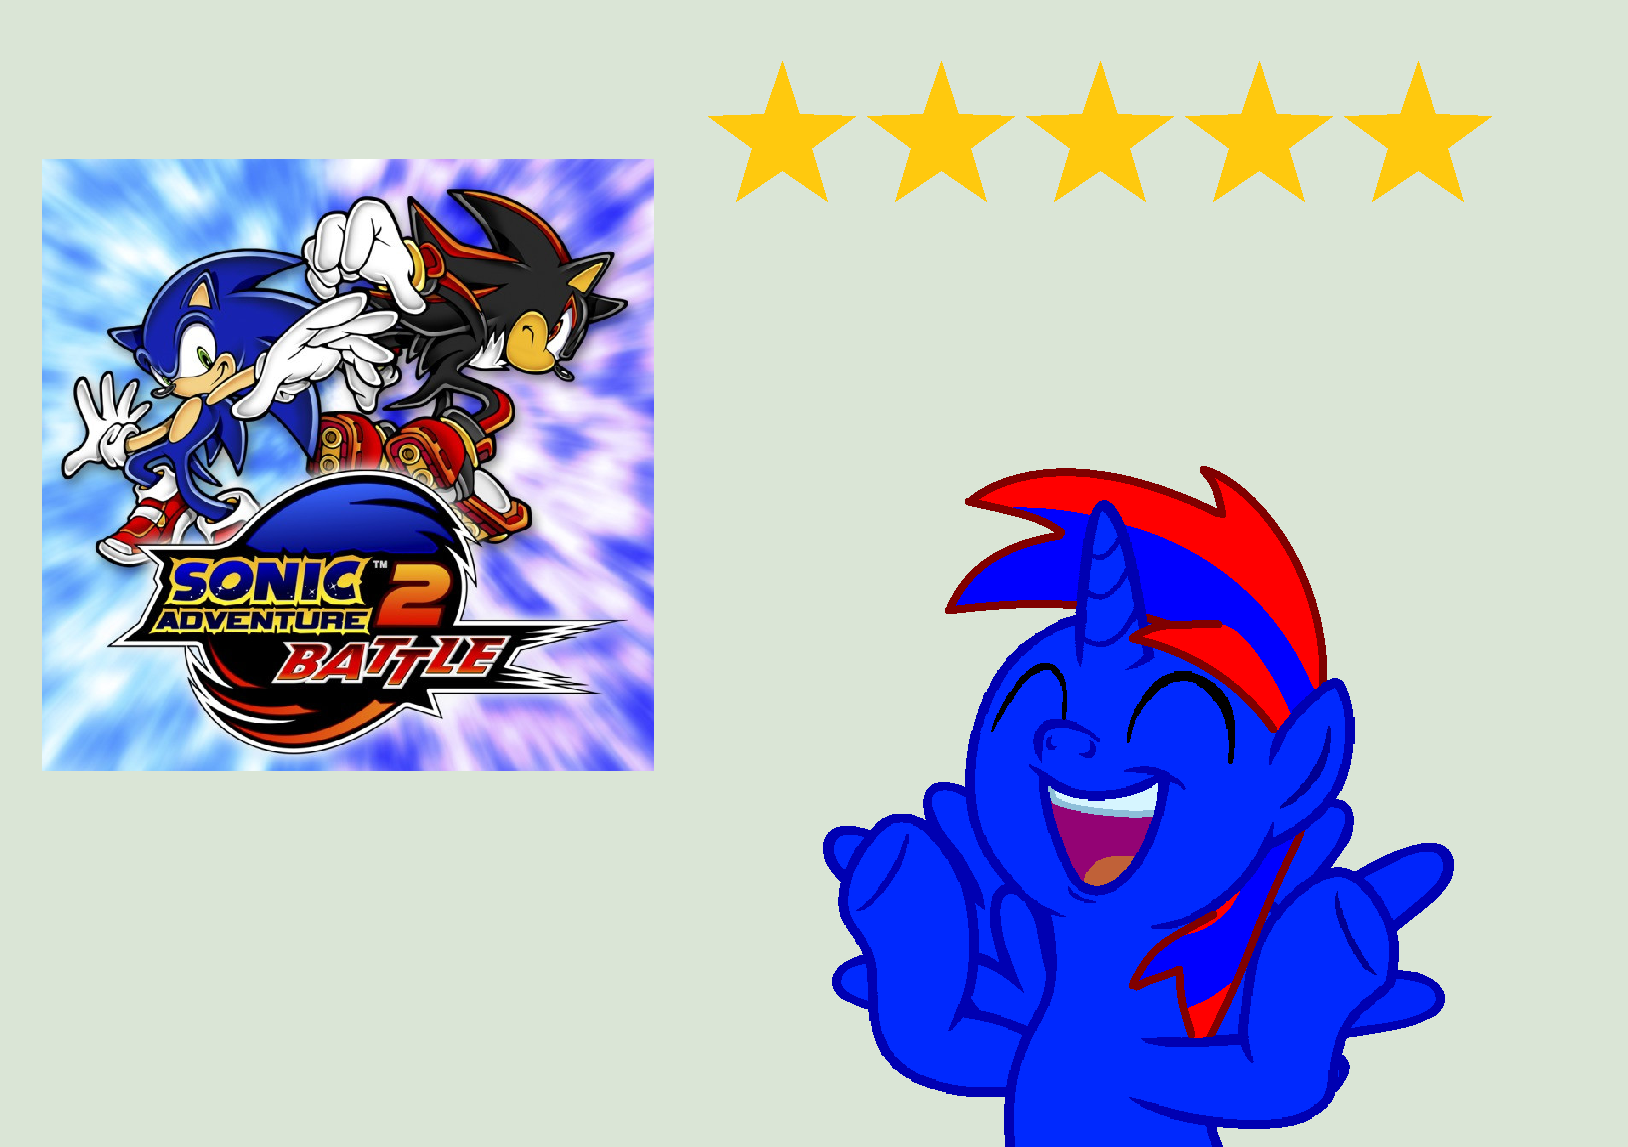 Sonic P-02: Sonic 2006 in Adventure 2 